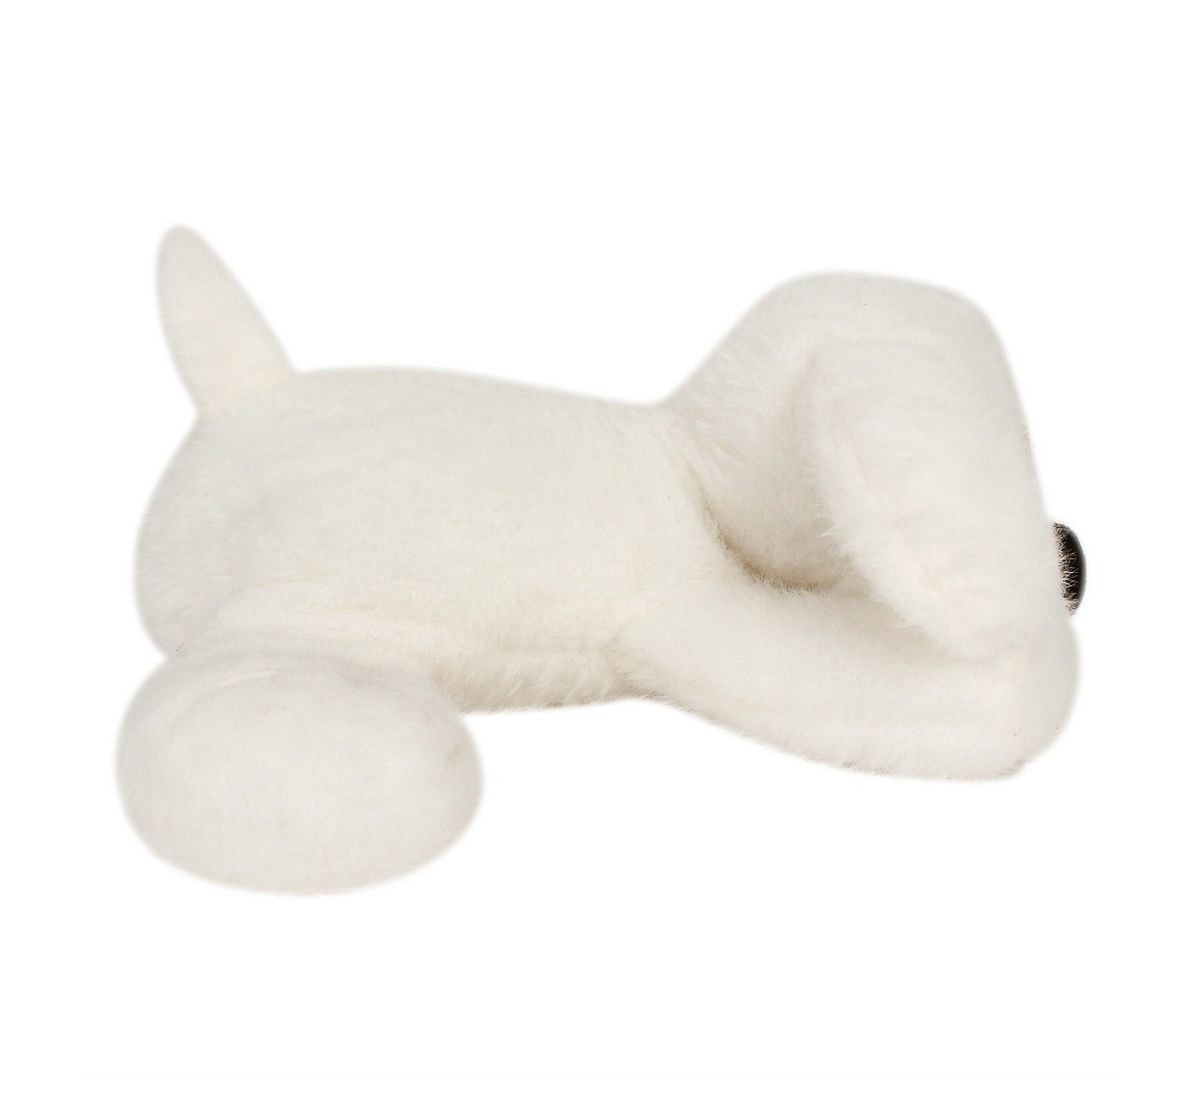 Fuzzbuzz Soft Lying Dog - White - 33Cm Quirky Soft Toys for Kids age 0M+ - 15 Cm (White)